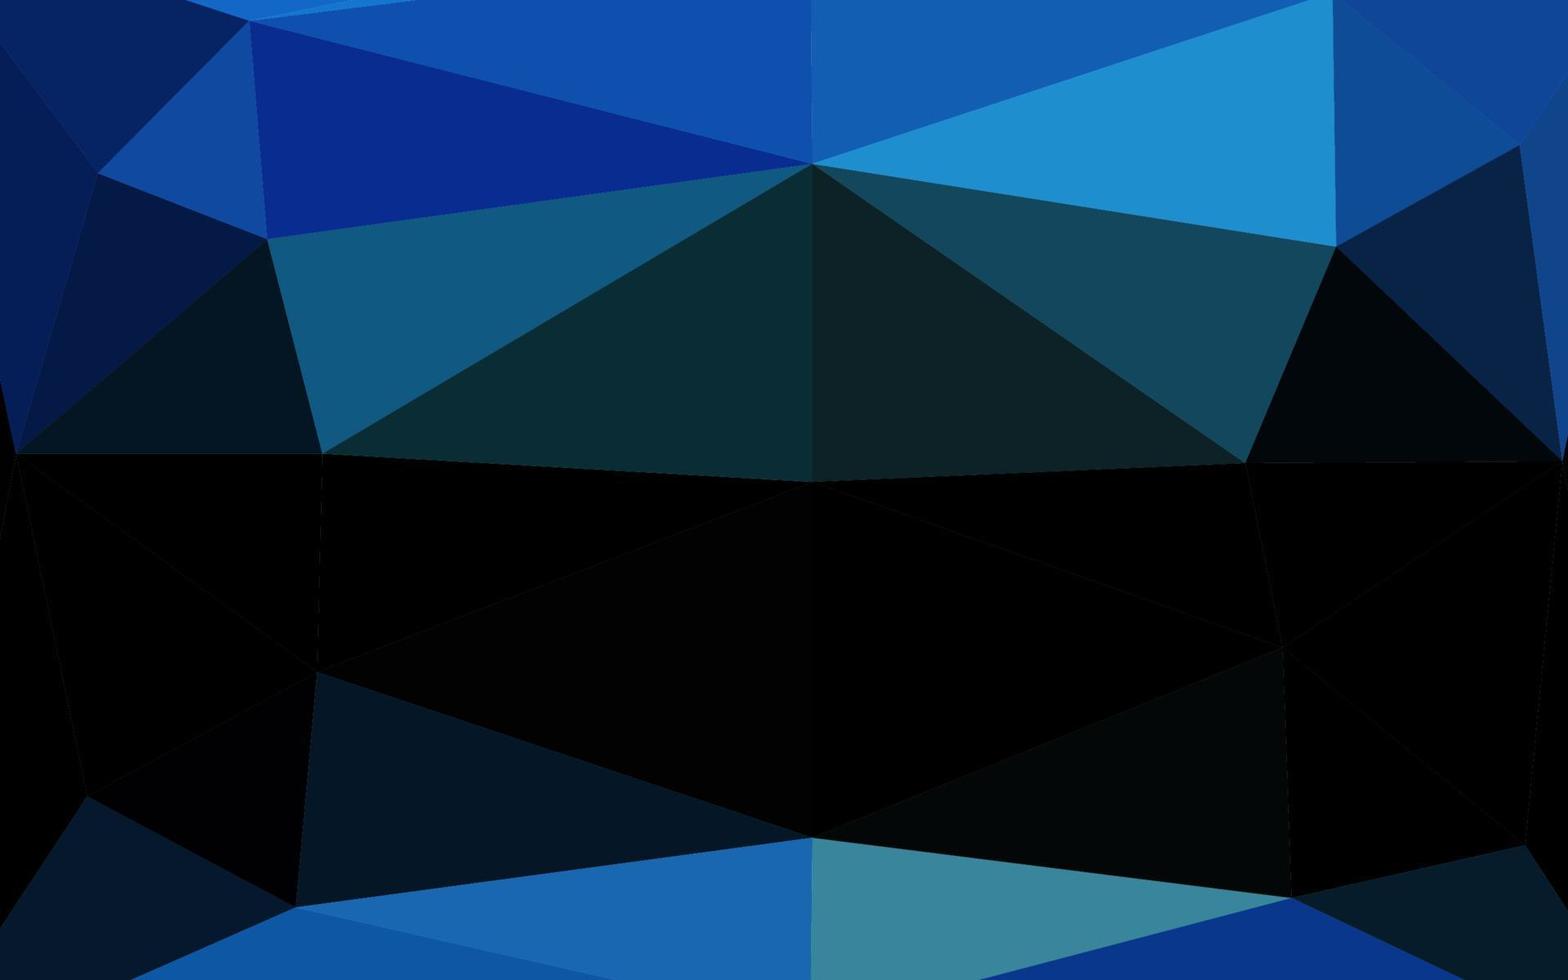 Plantilla de triángulo borroso de vector azul oscuro.